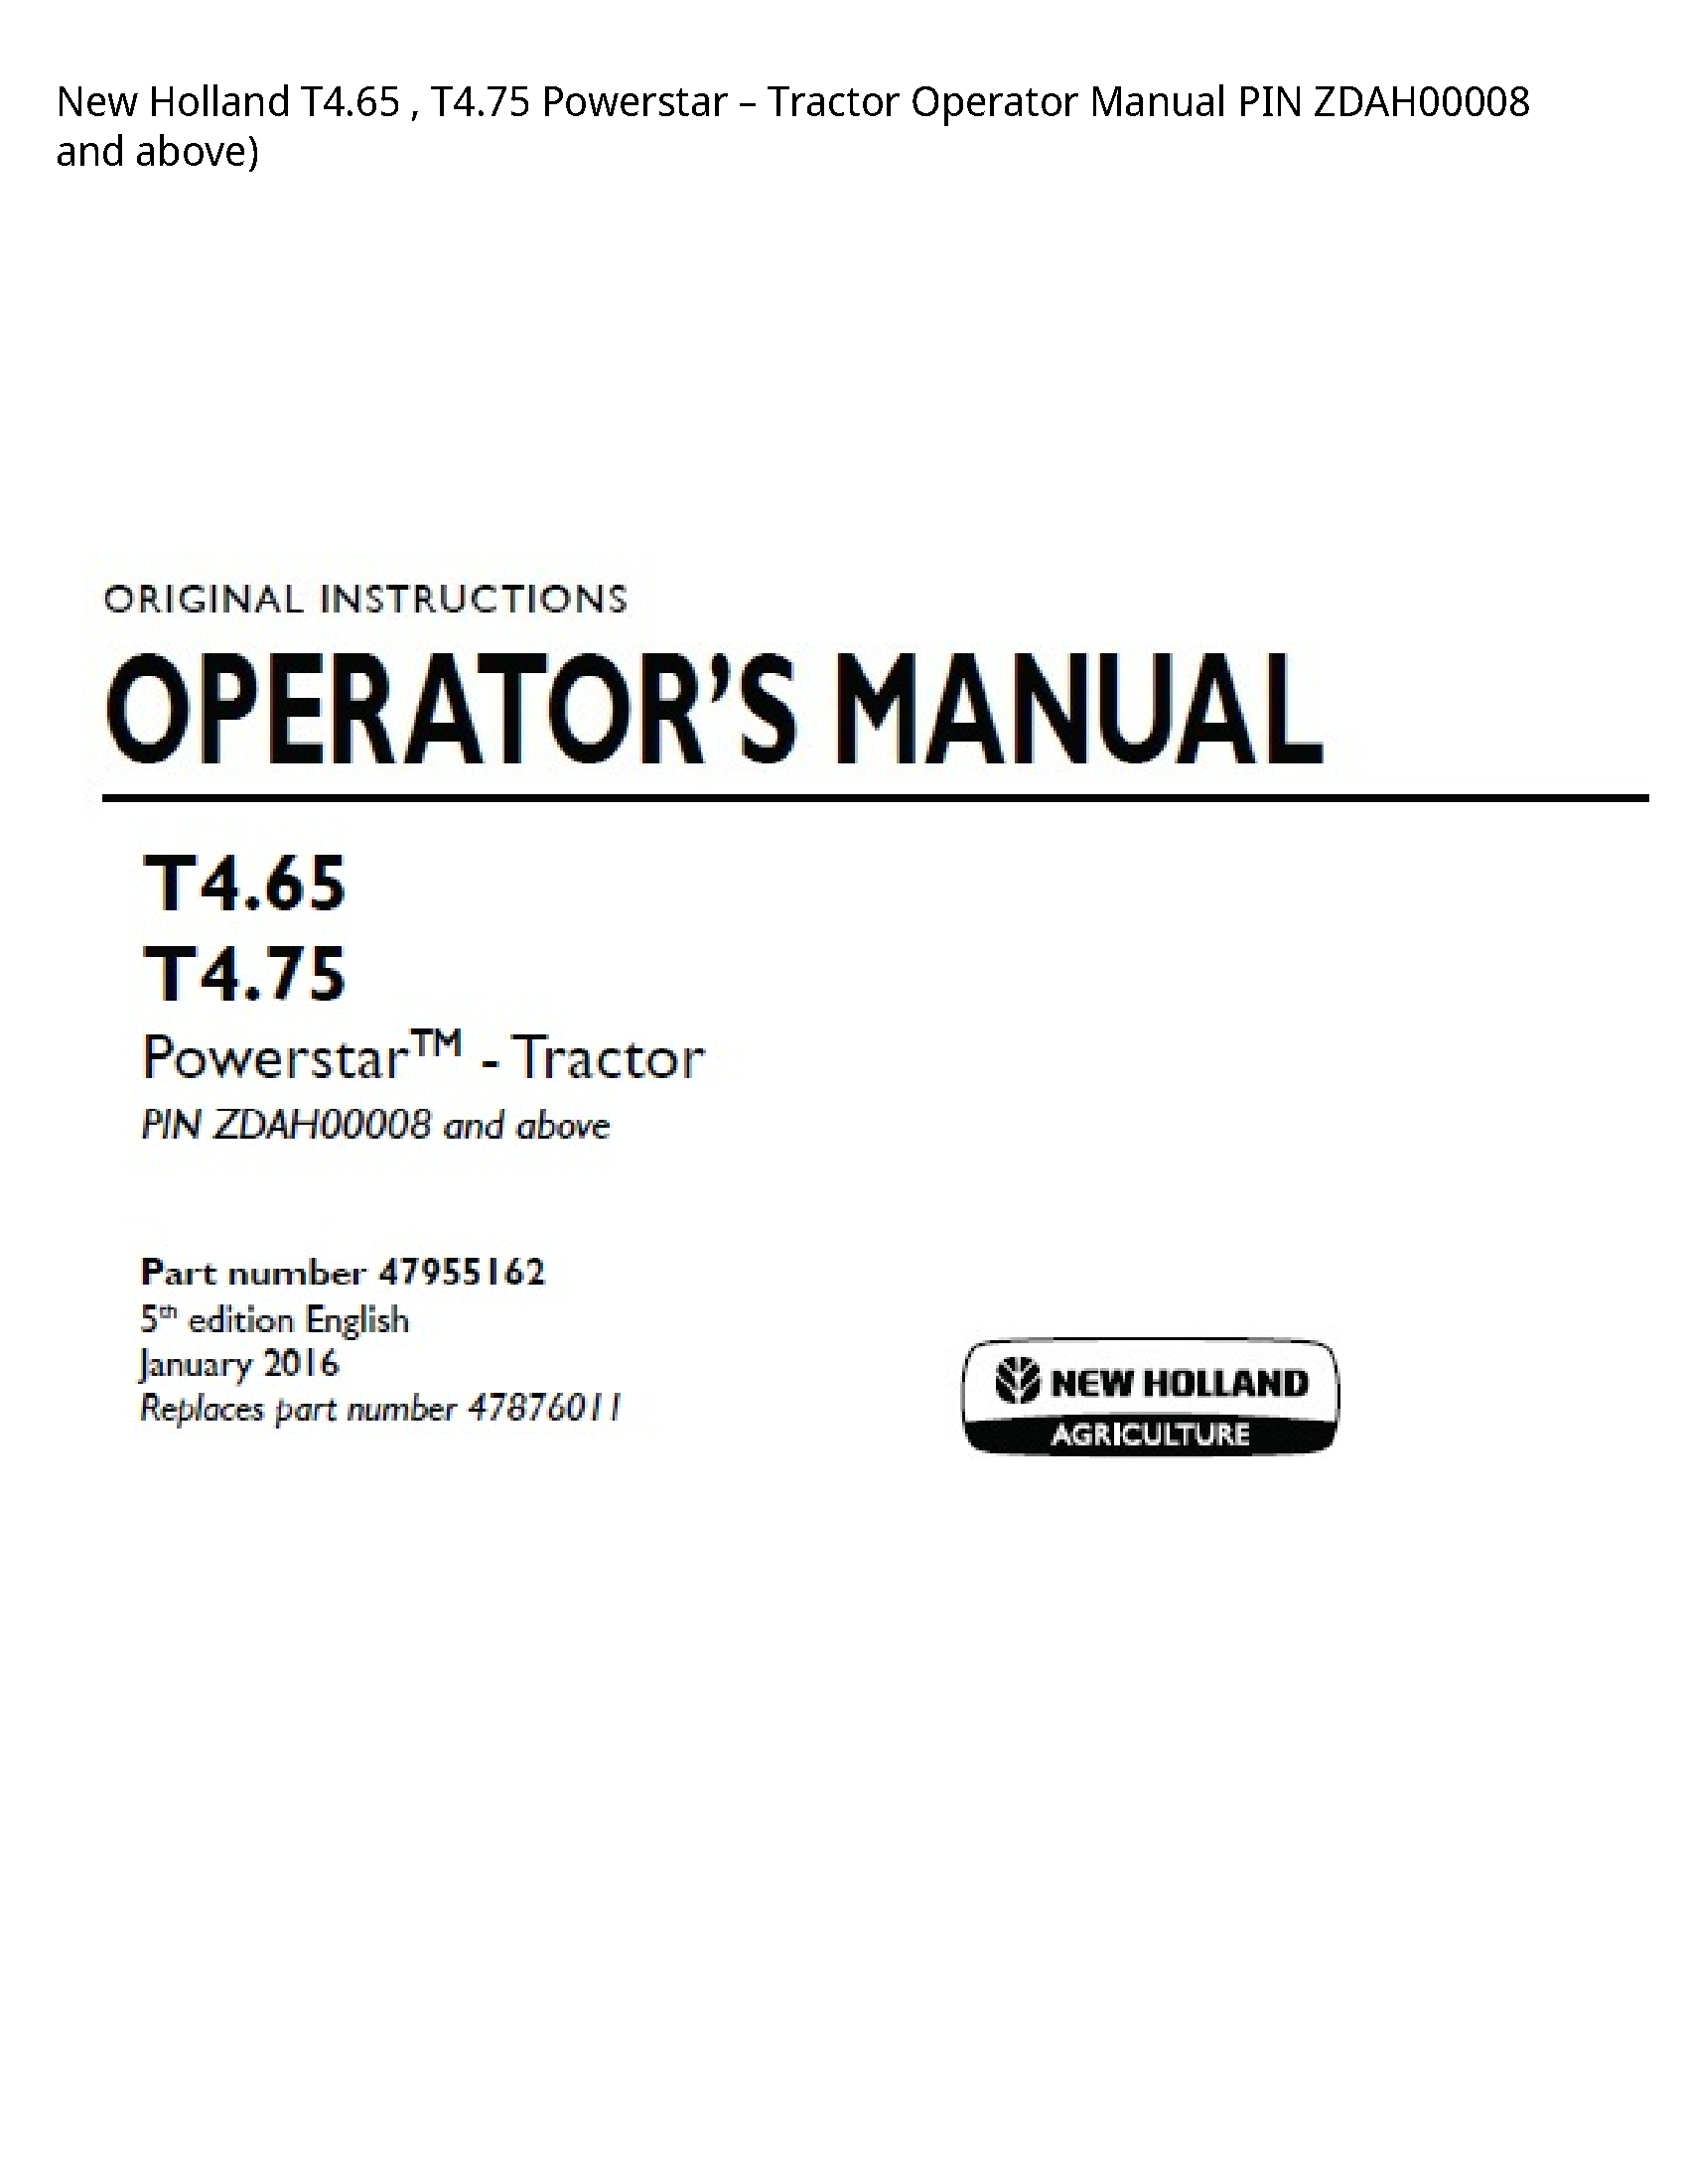 New Holland T4.65 Powerstar Tractor Operator manual